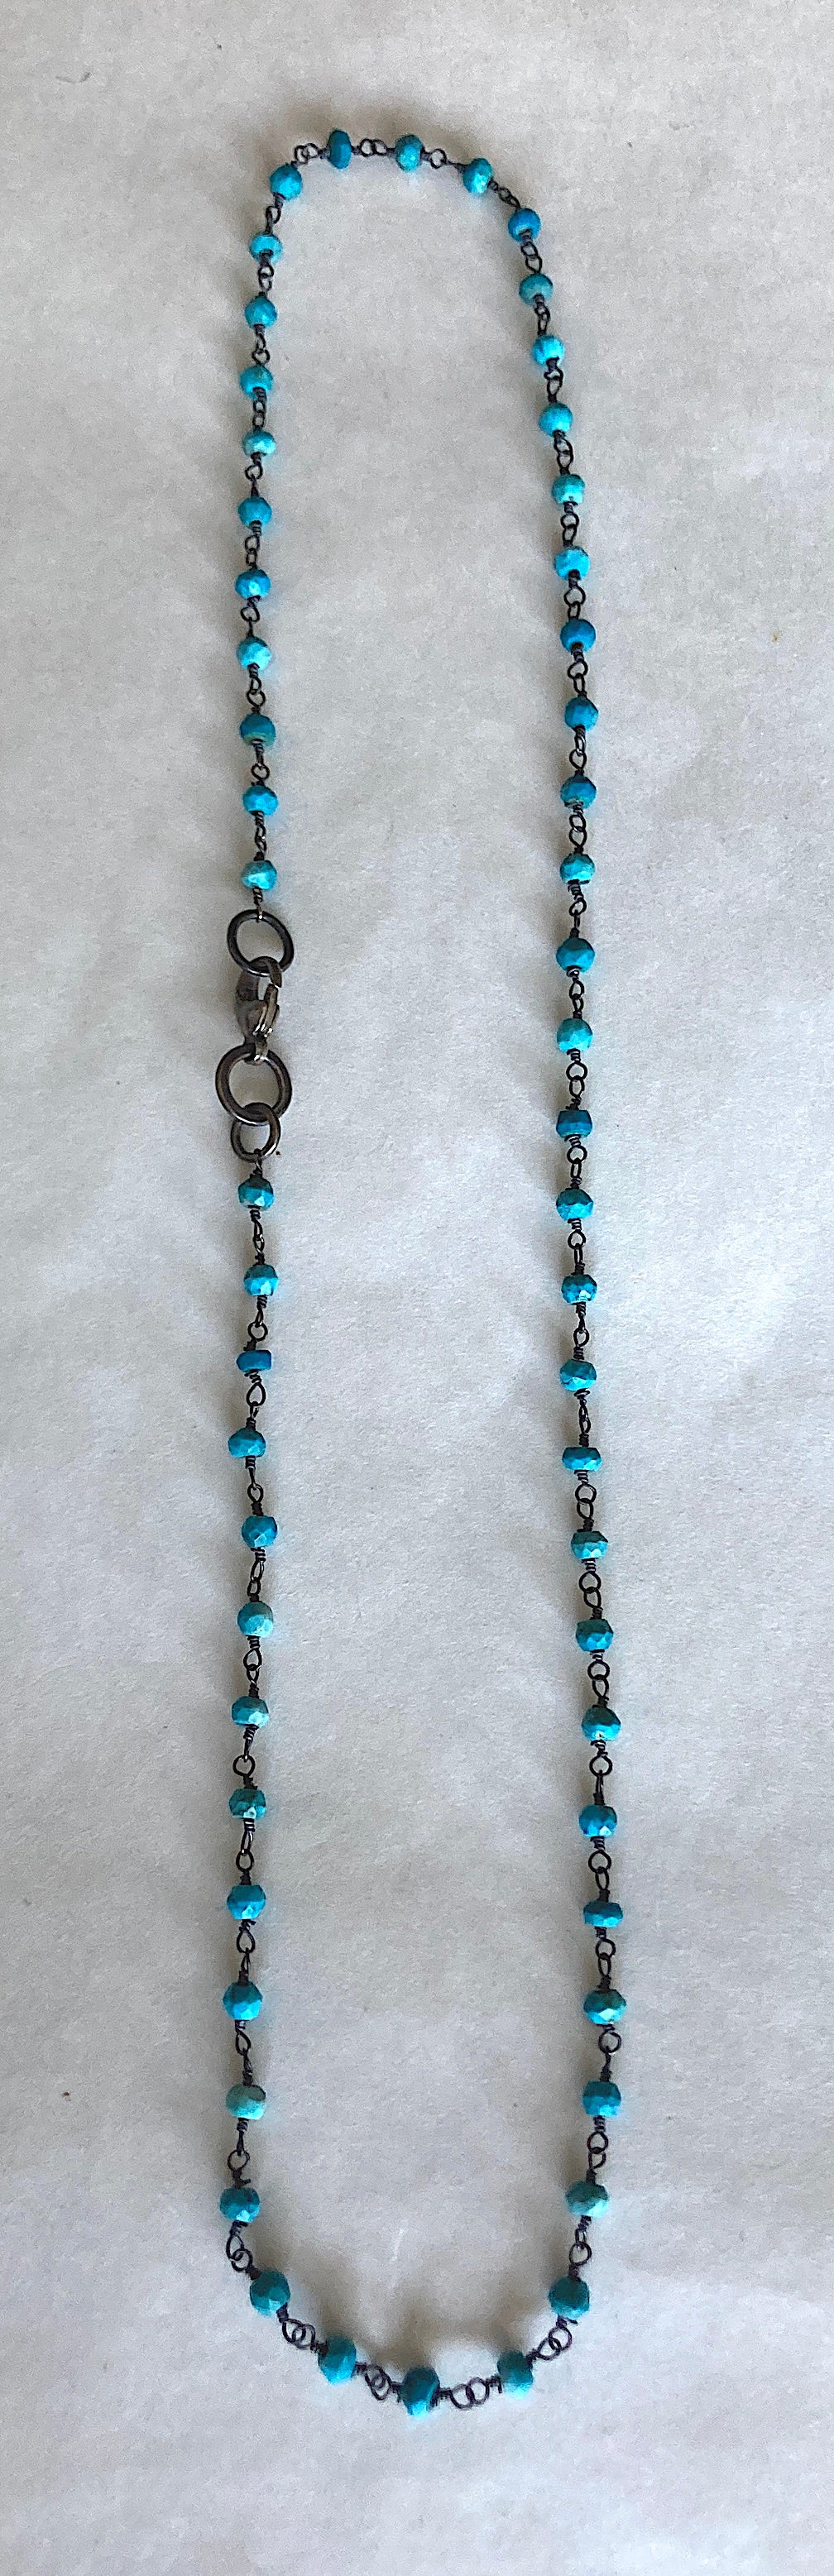 Turquoise Chain